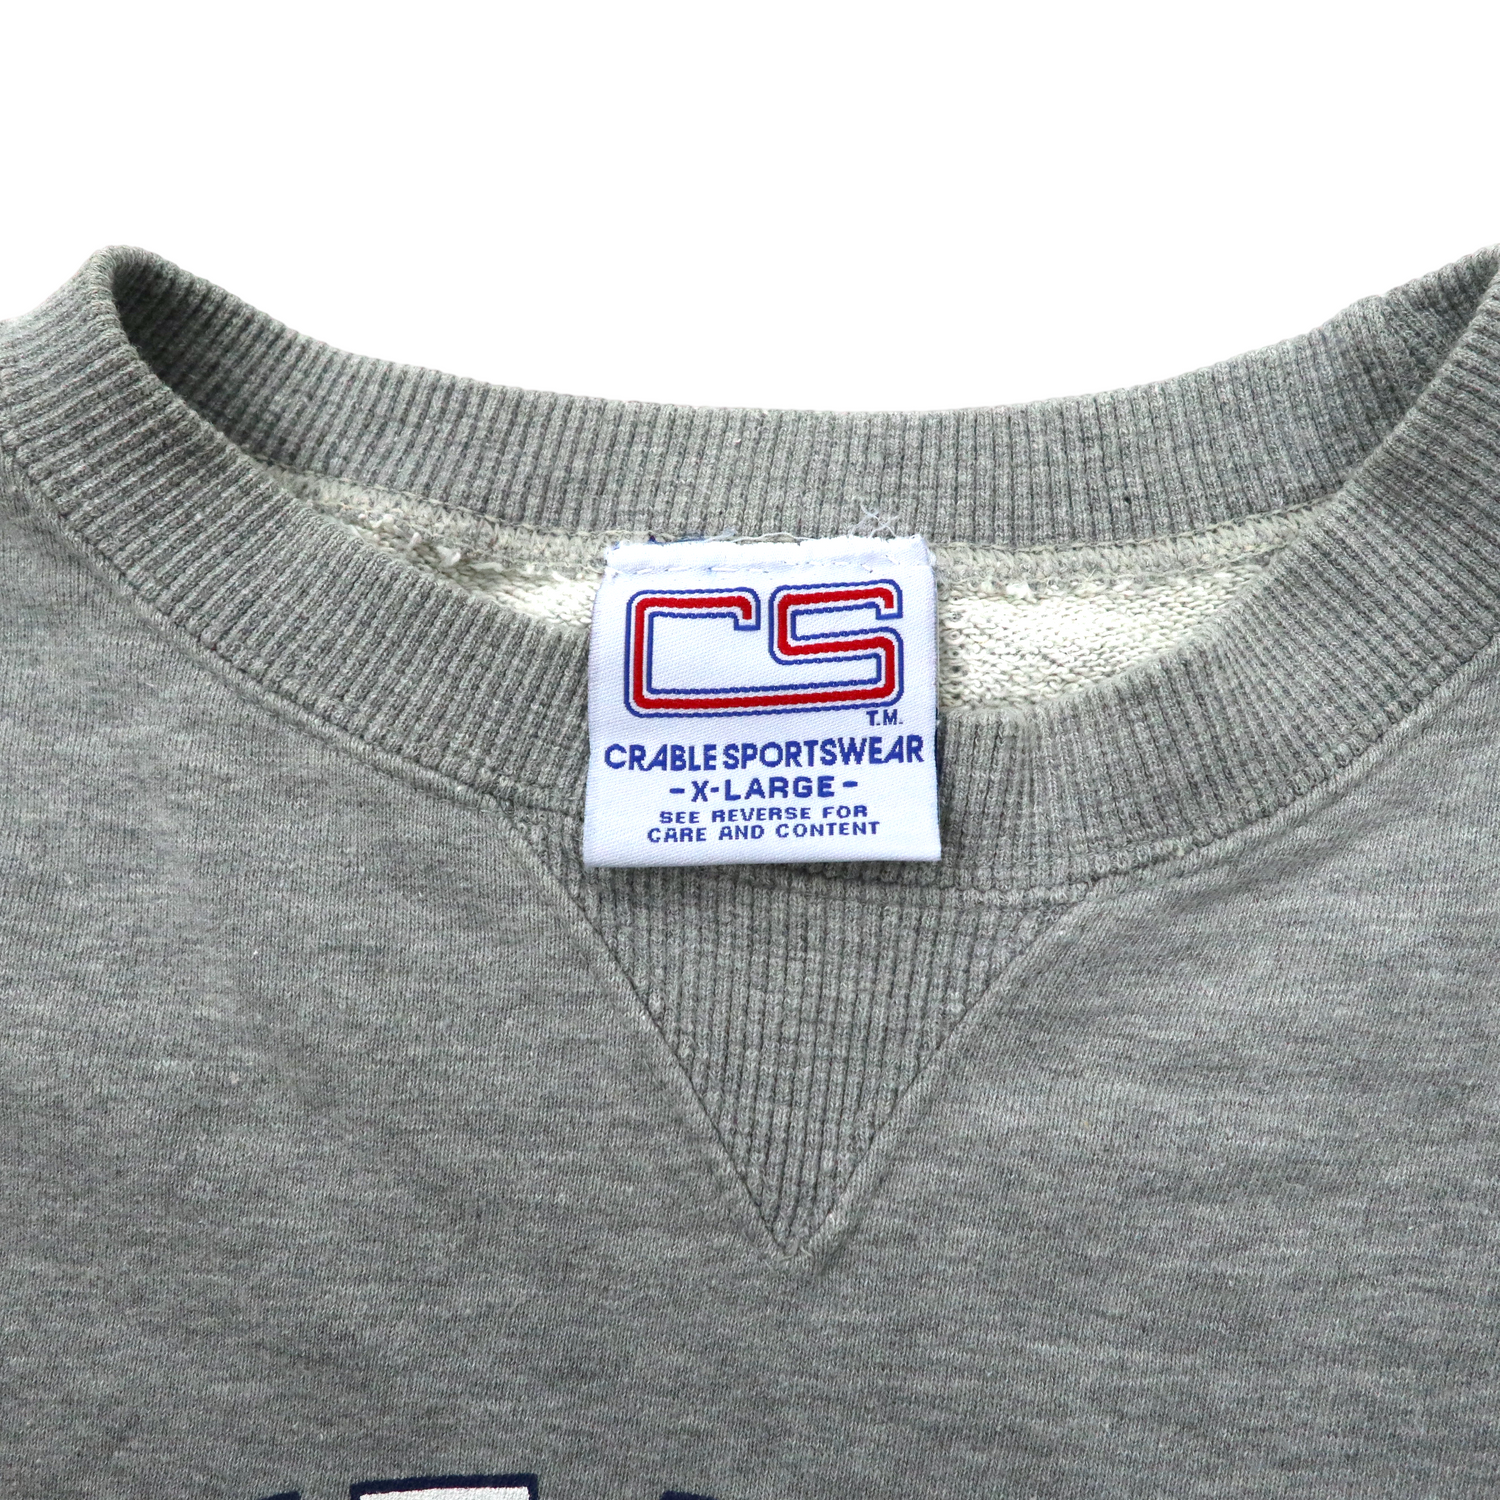 USA MADE CRABLE SPORTSWEAR Big College Print Sweatshirt XL Gray Cotton 90s